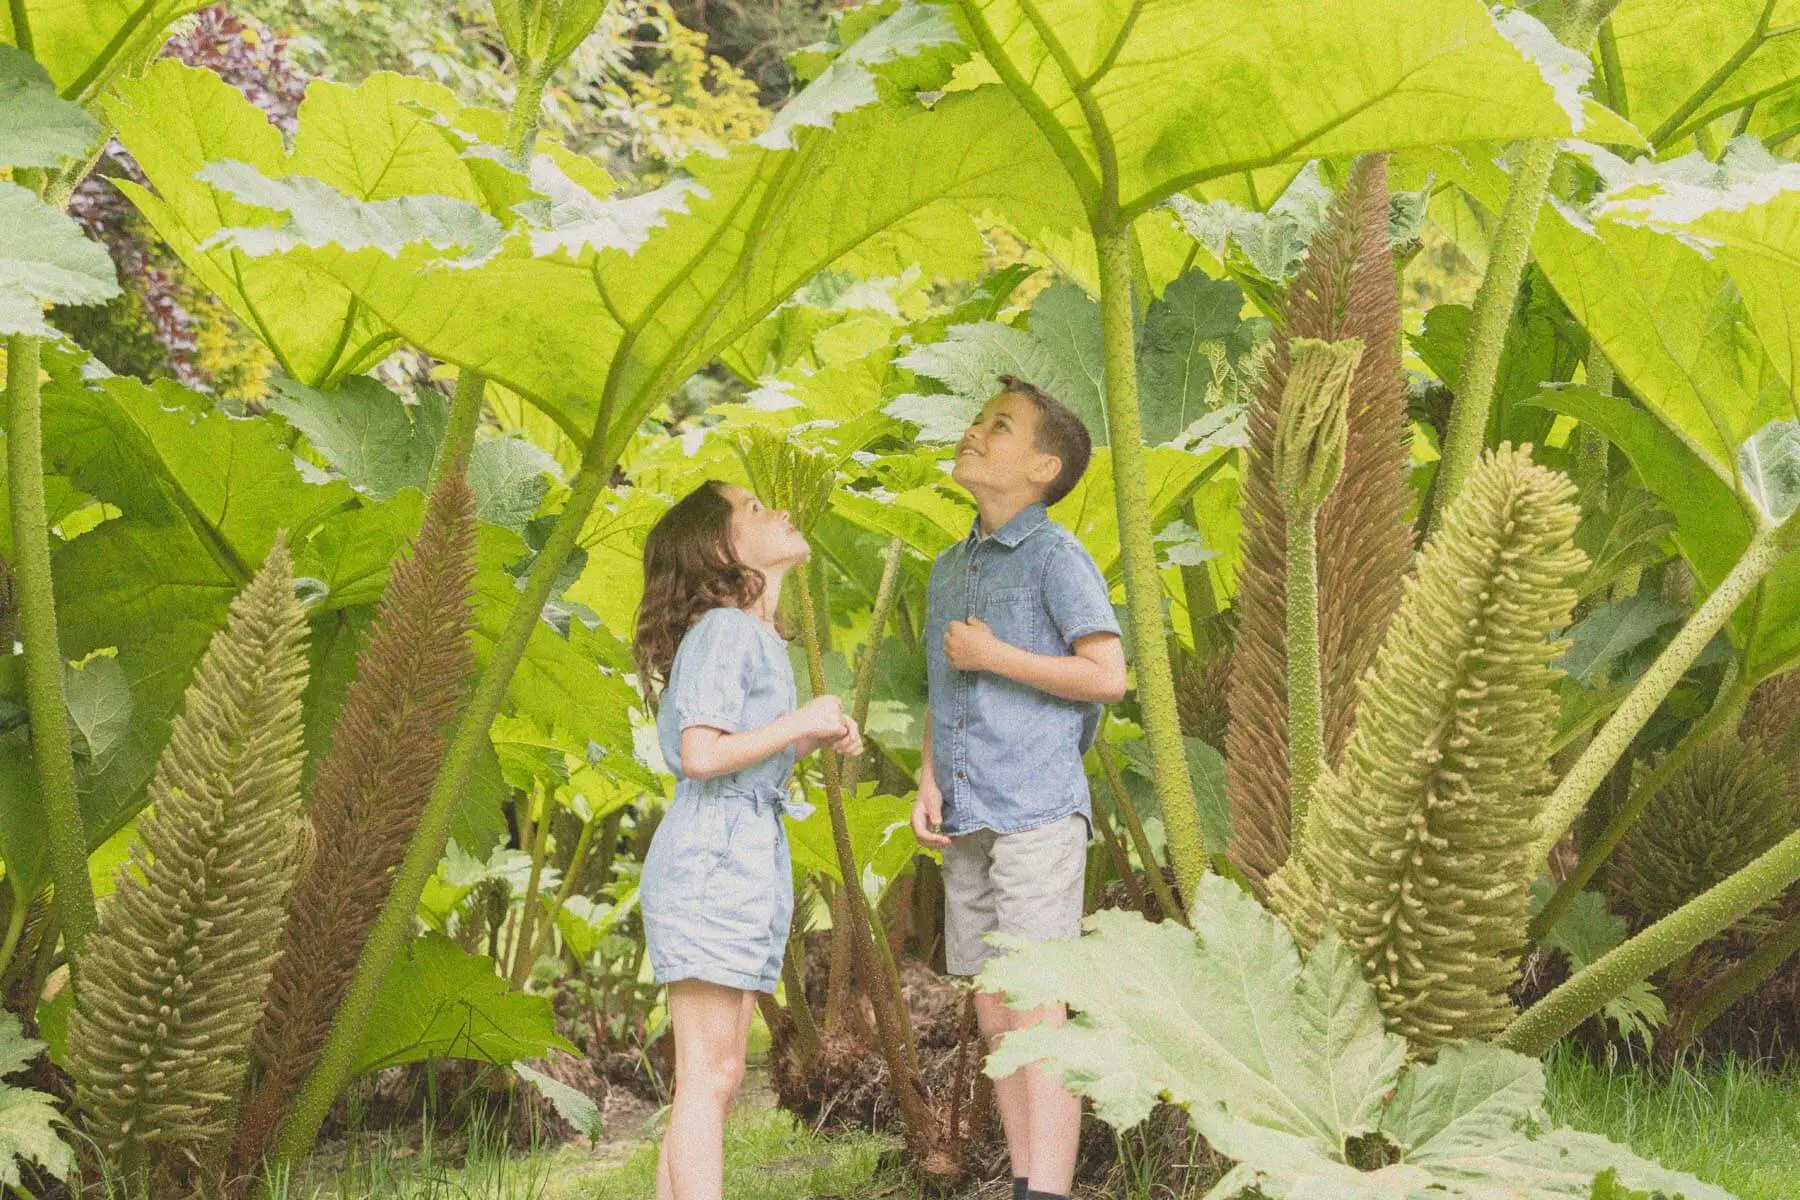 Children exploring a garden with giant Gunnera